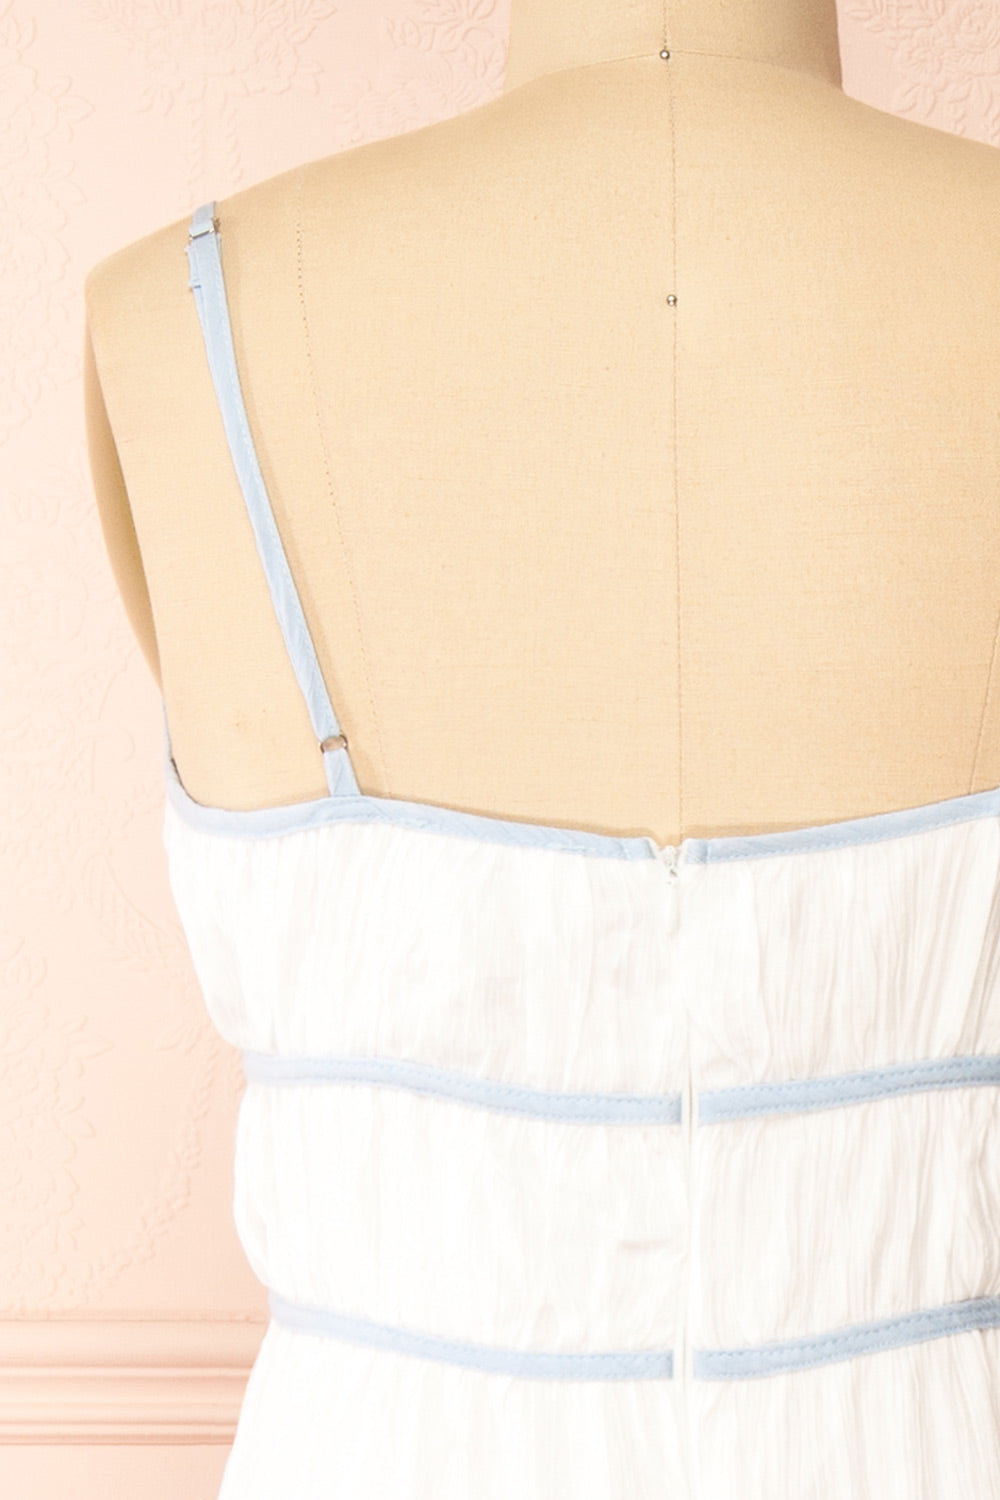 Juliriel White Midi Dress w/ Blue Ribbons | Boutique 1861 back close-up